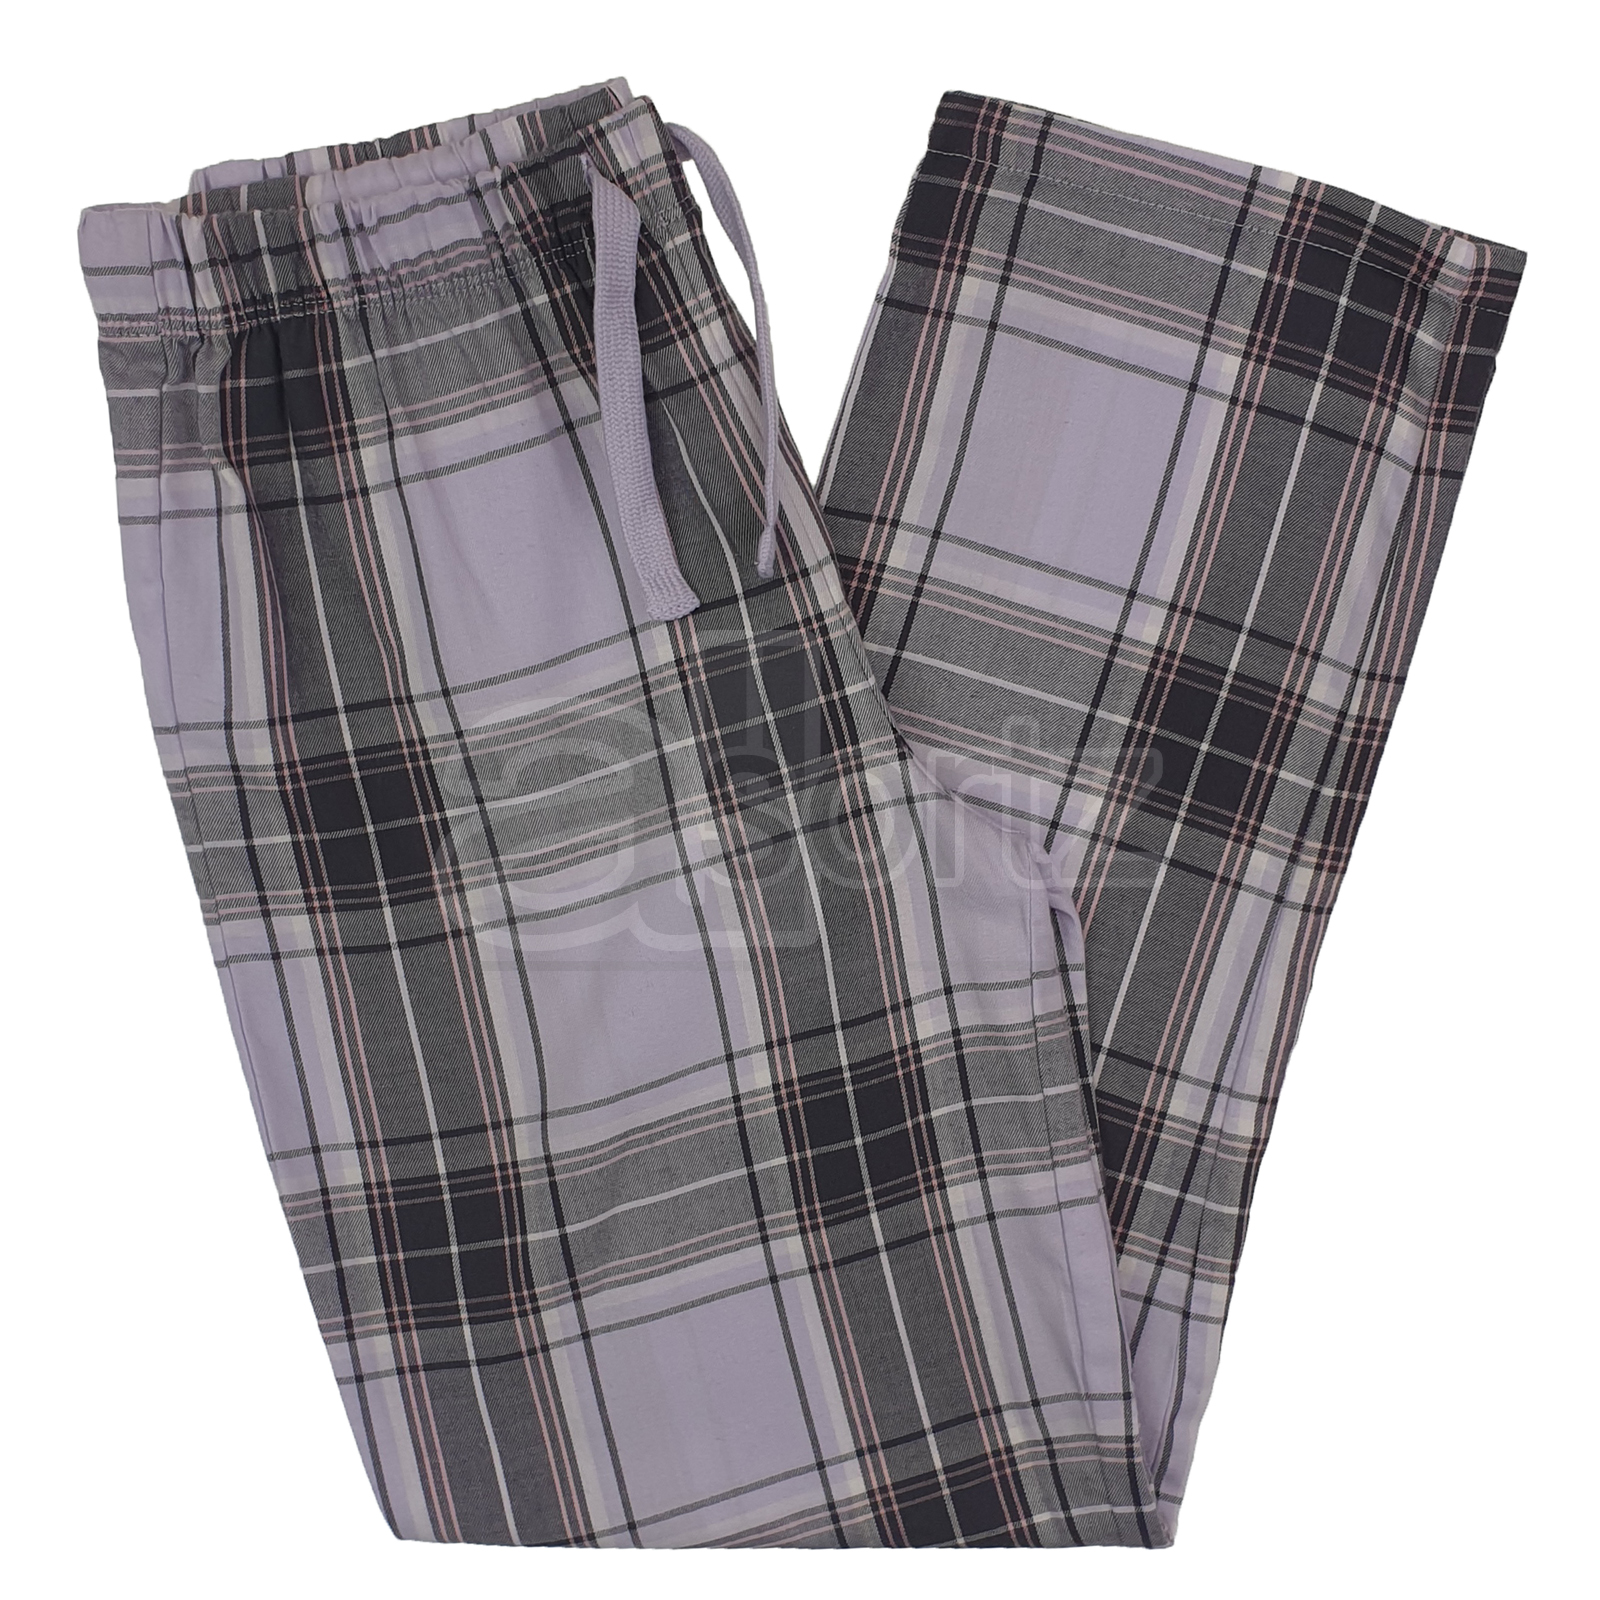 Pyjama bottoms - Dark grey/Checked - Ladies